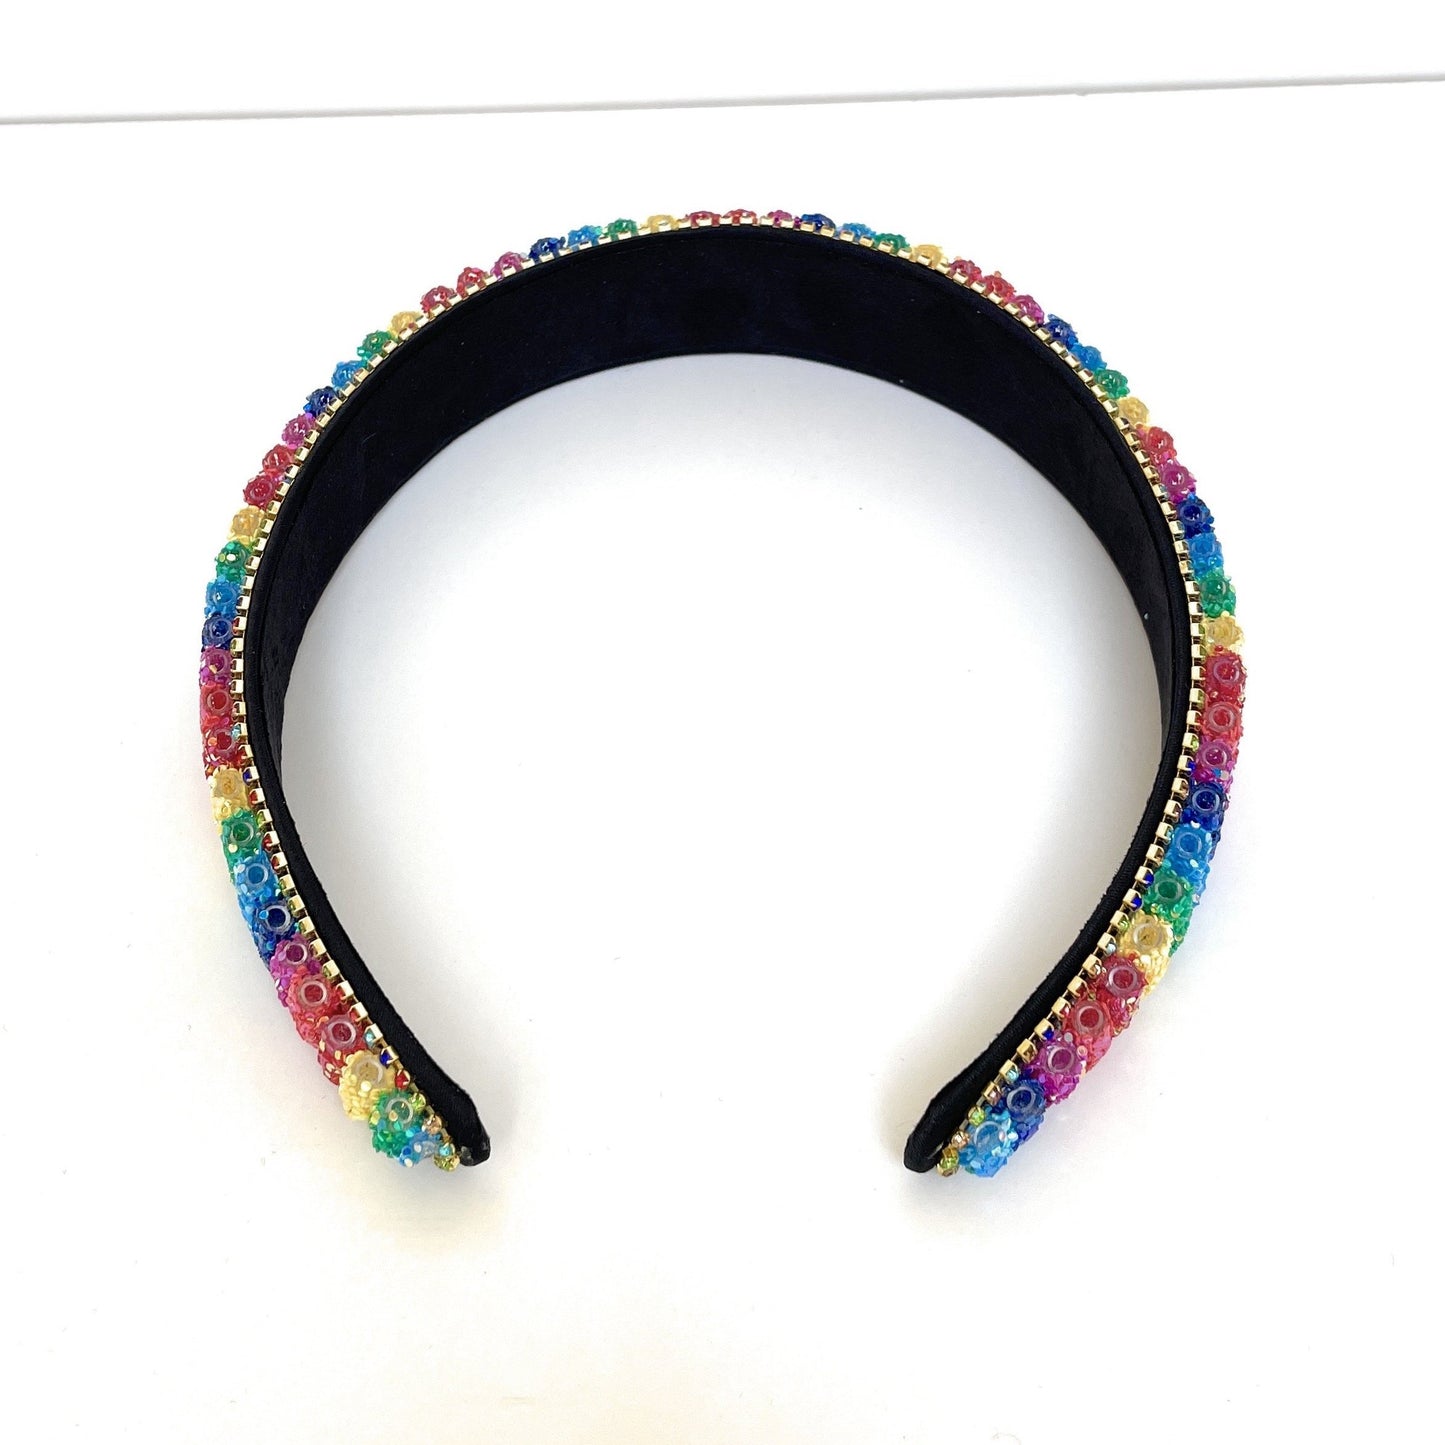 Rainbow Headband